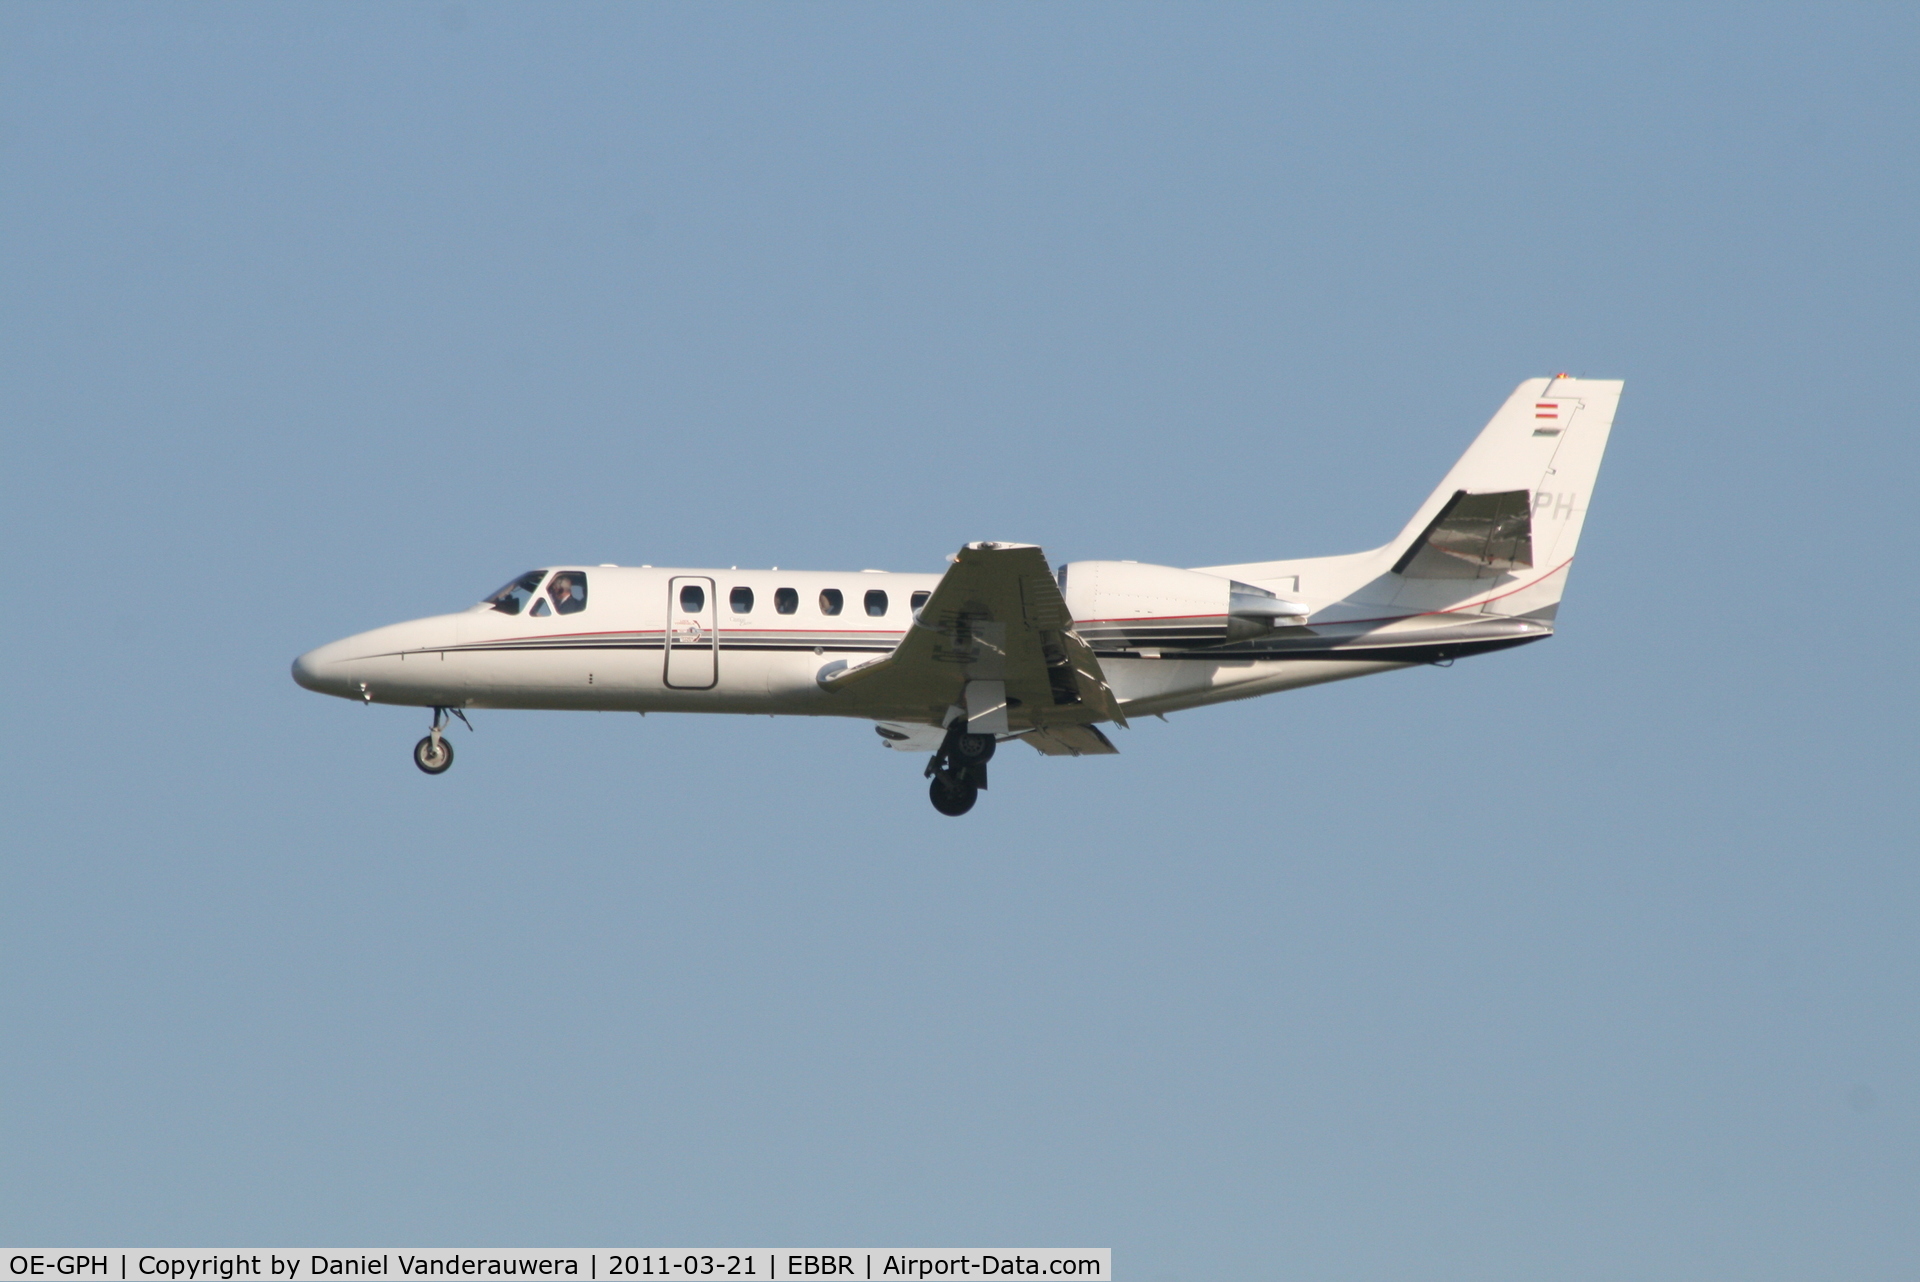 OE-GPH, 2001 Cessna 560 Citation Encore C/N 560-0590, Arrival to RWY 25L